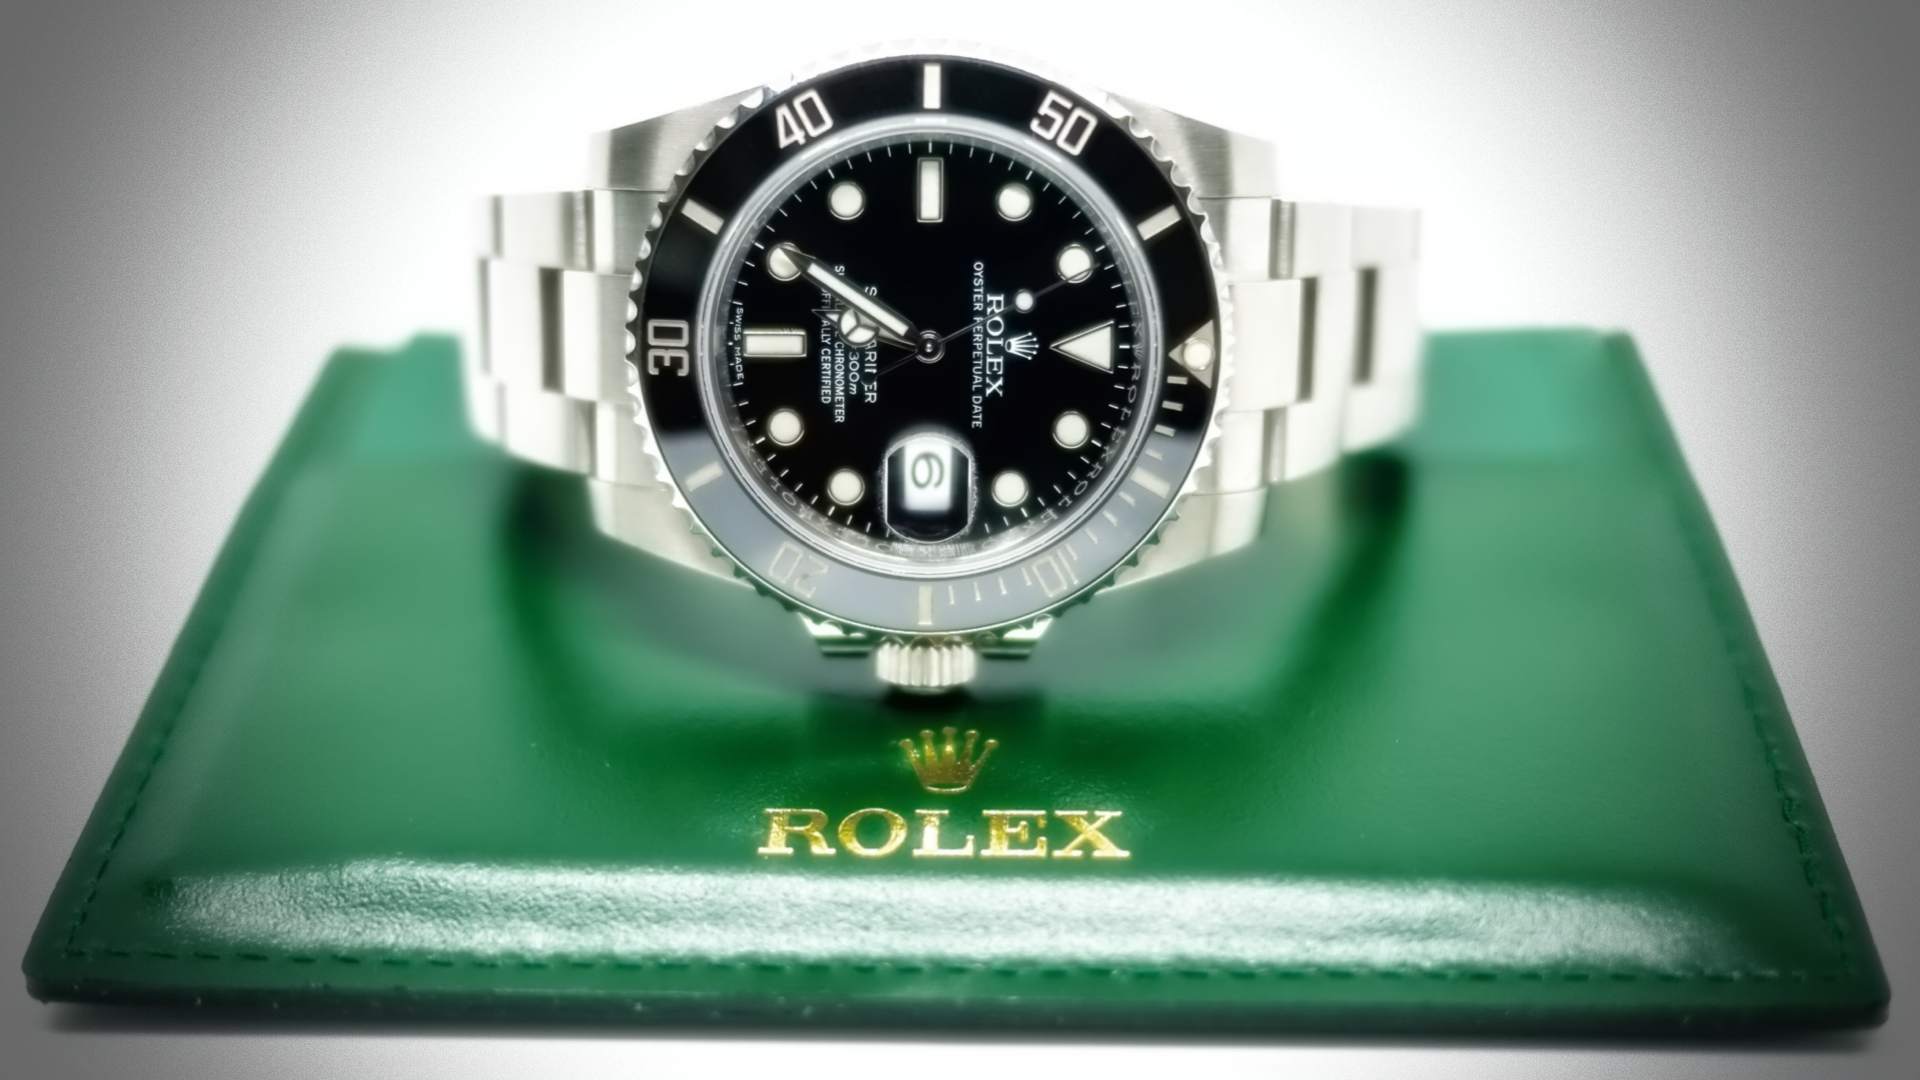 Rolex Watch Service Cost